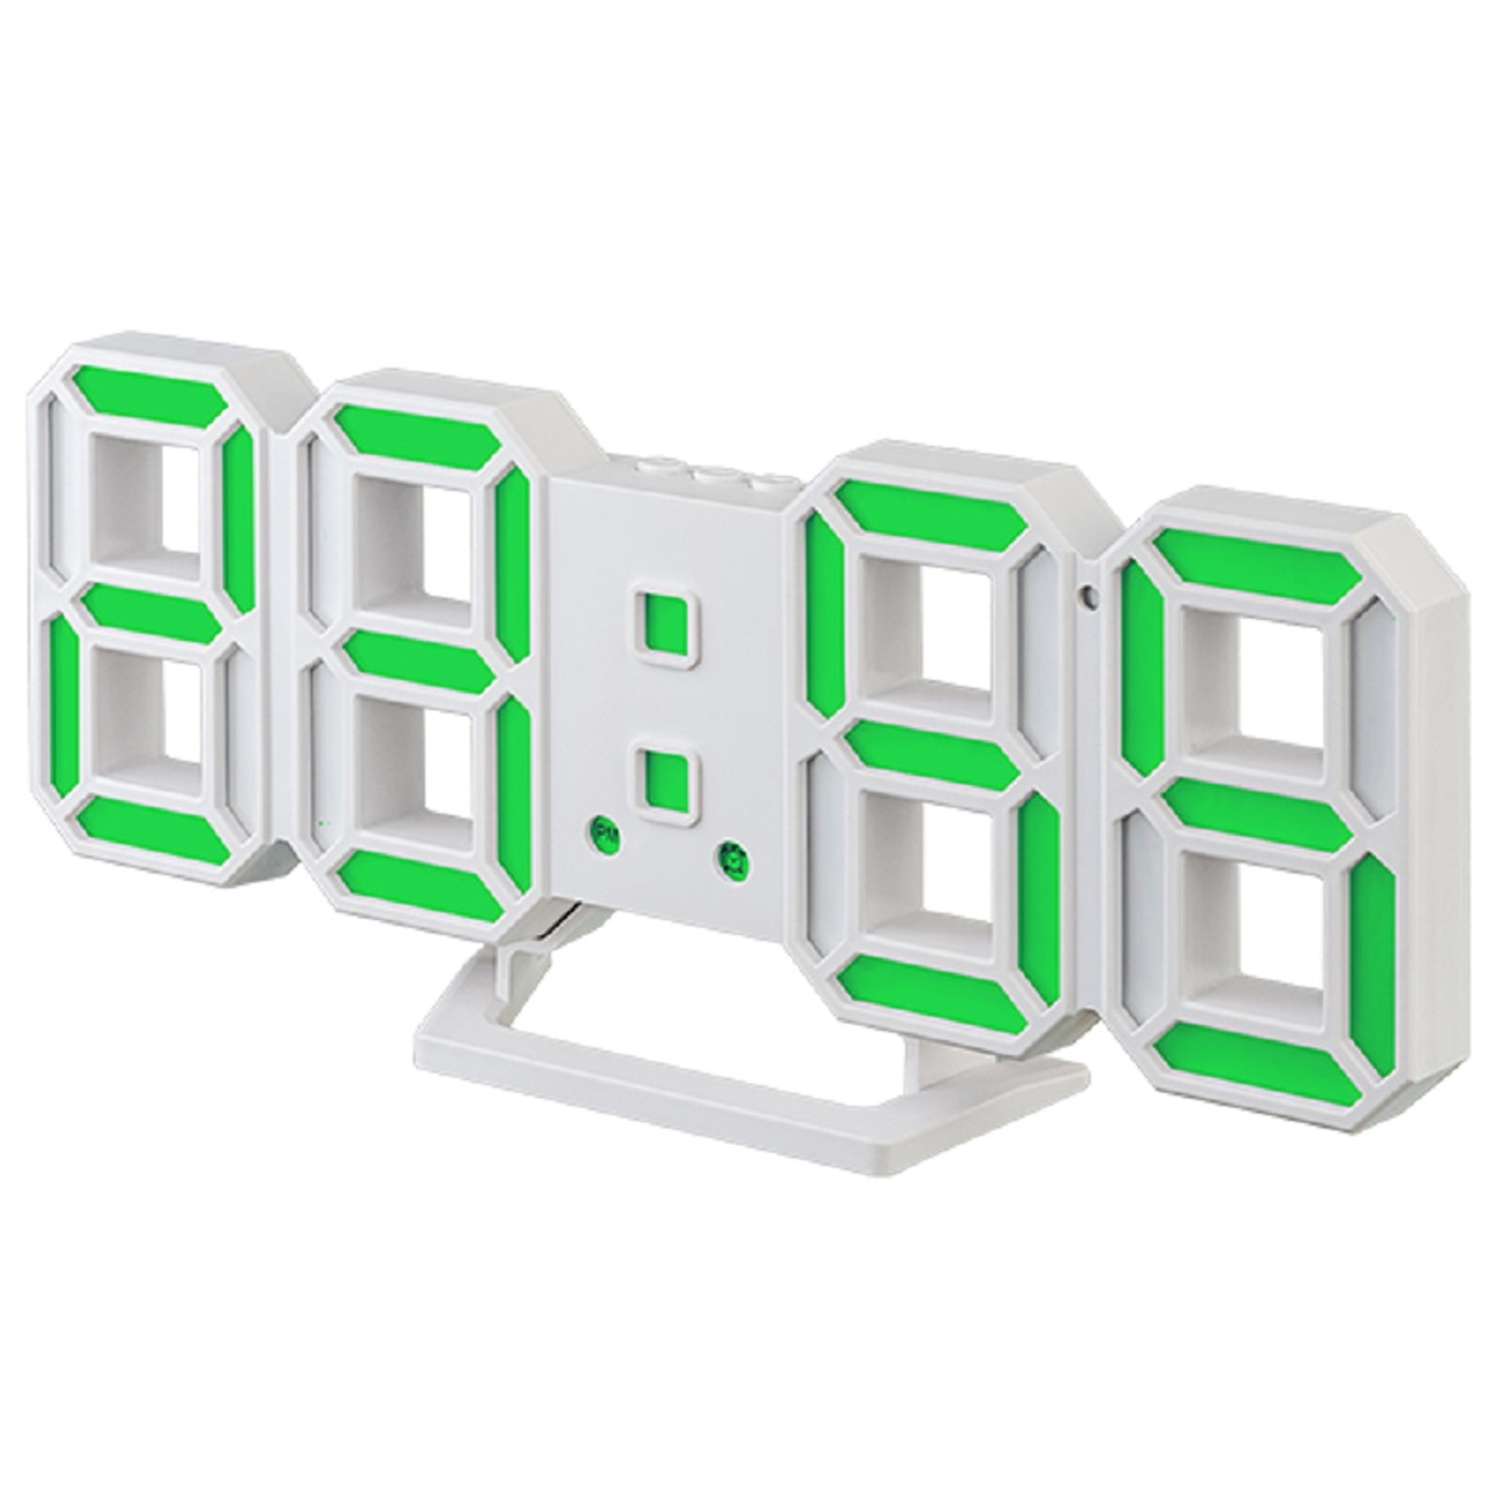 LED часы-будильник Perfeo LUMINOUS 2 белый корпус зелёная подсветка PF-6111 - фото 1